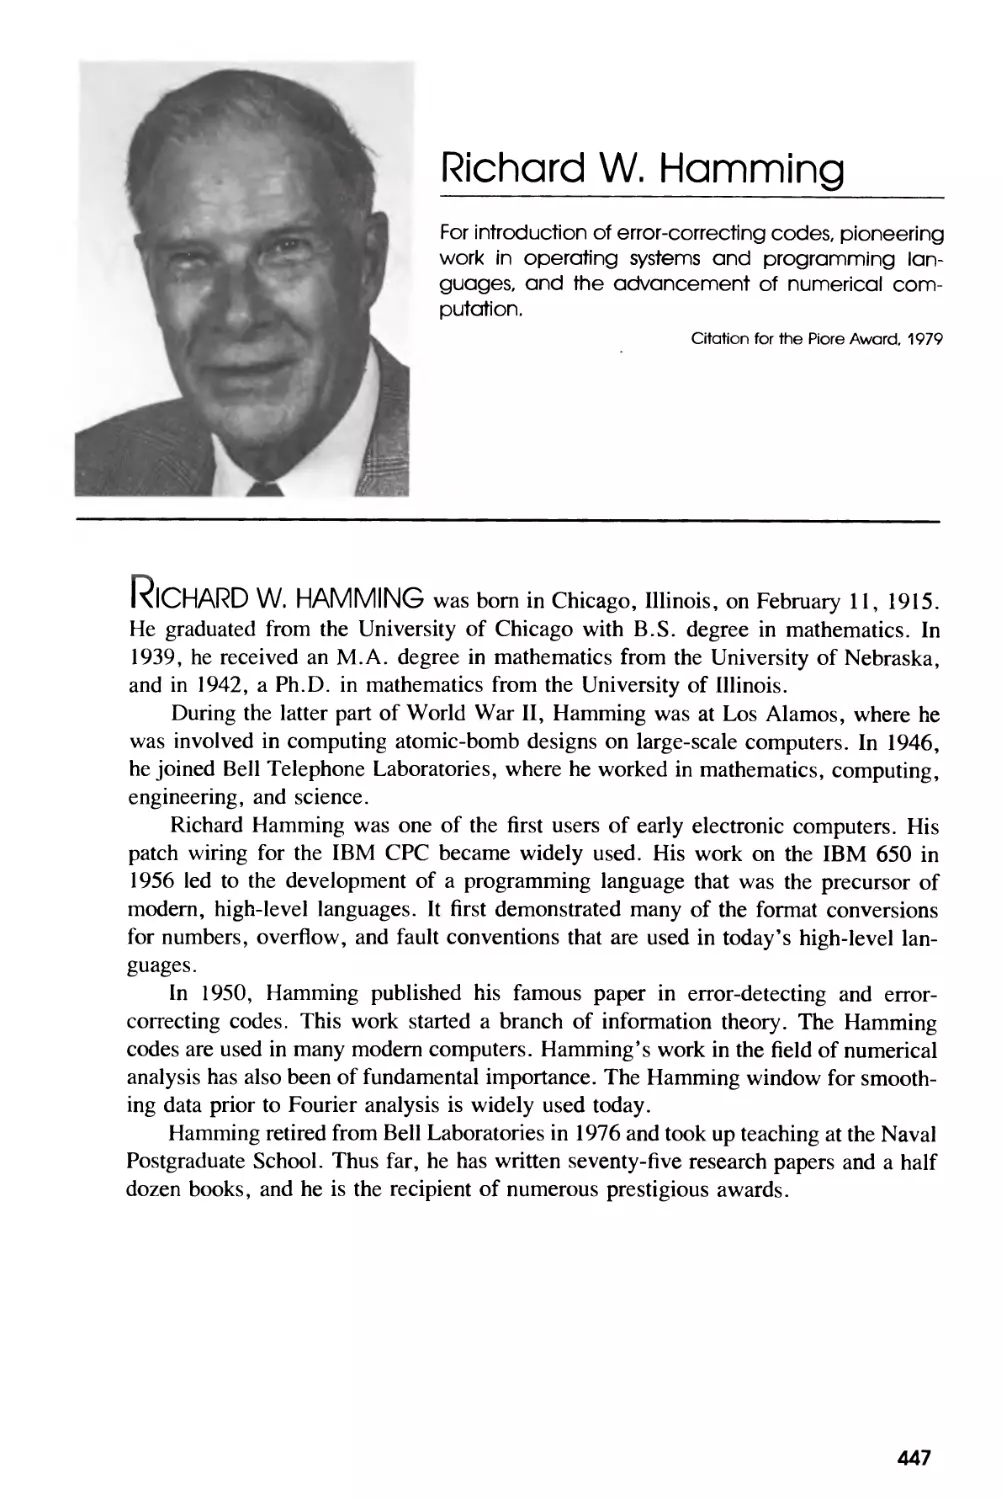 Biography of Richard W. Hamming